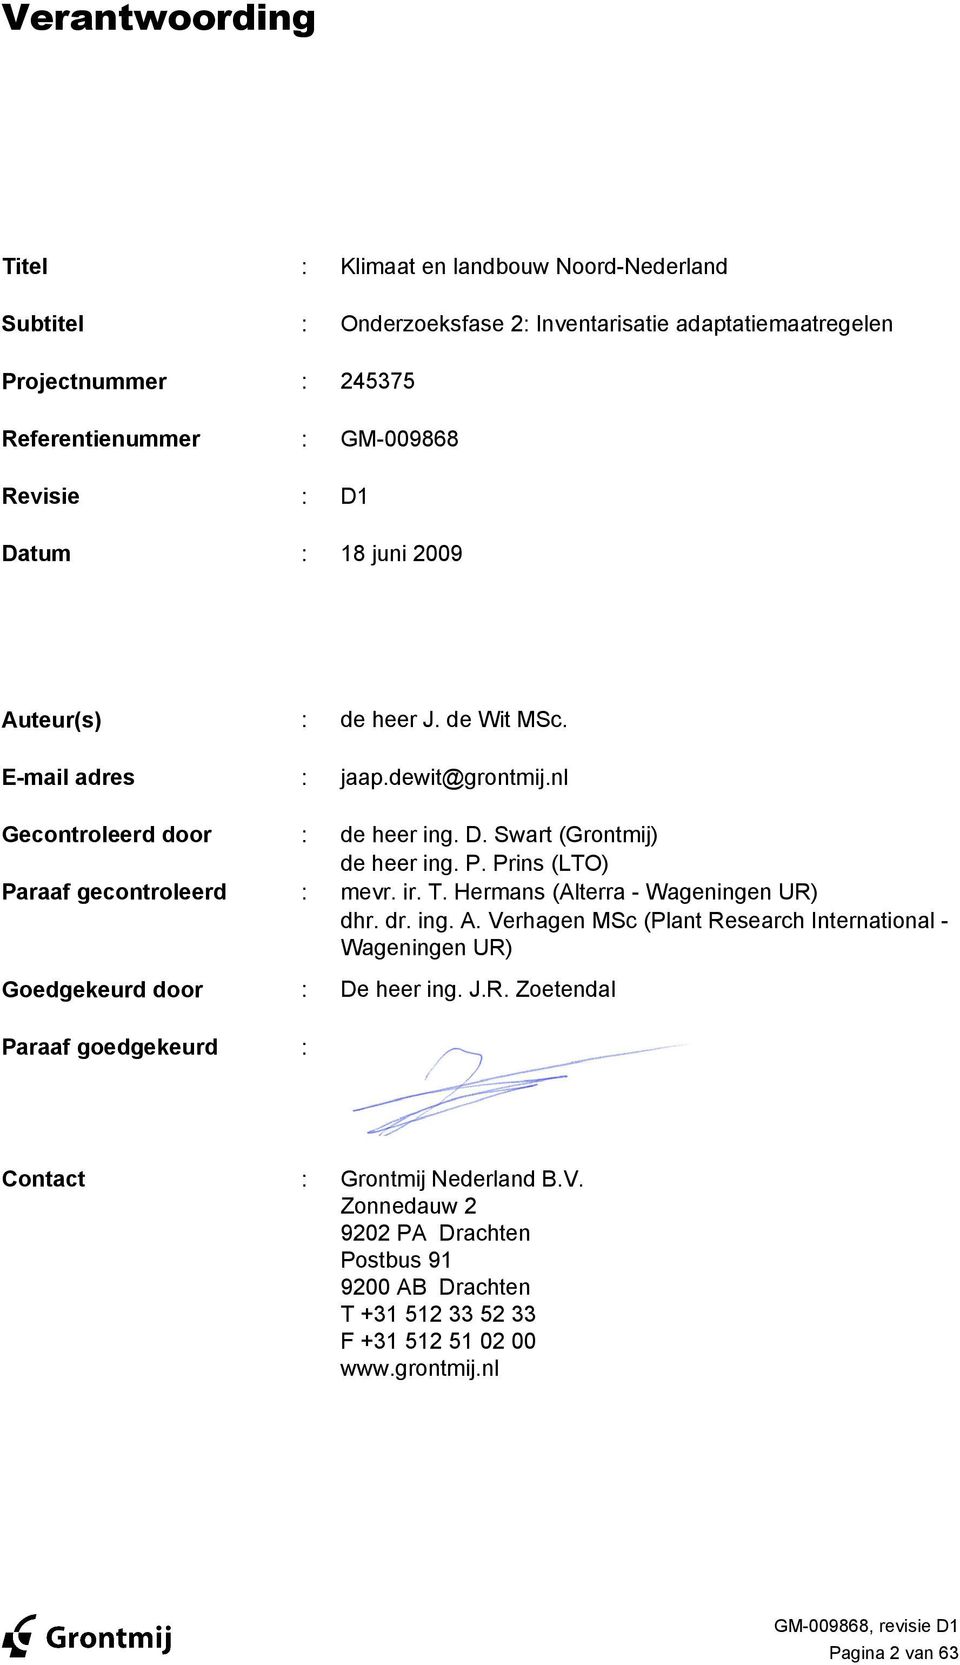 Prins (LTO) Paraaf gecontroleerd : mevr. ir. T. Hermans (Alterra - Wageningen UR) dhr. dr. ing. A.